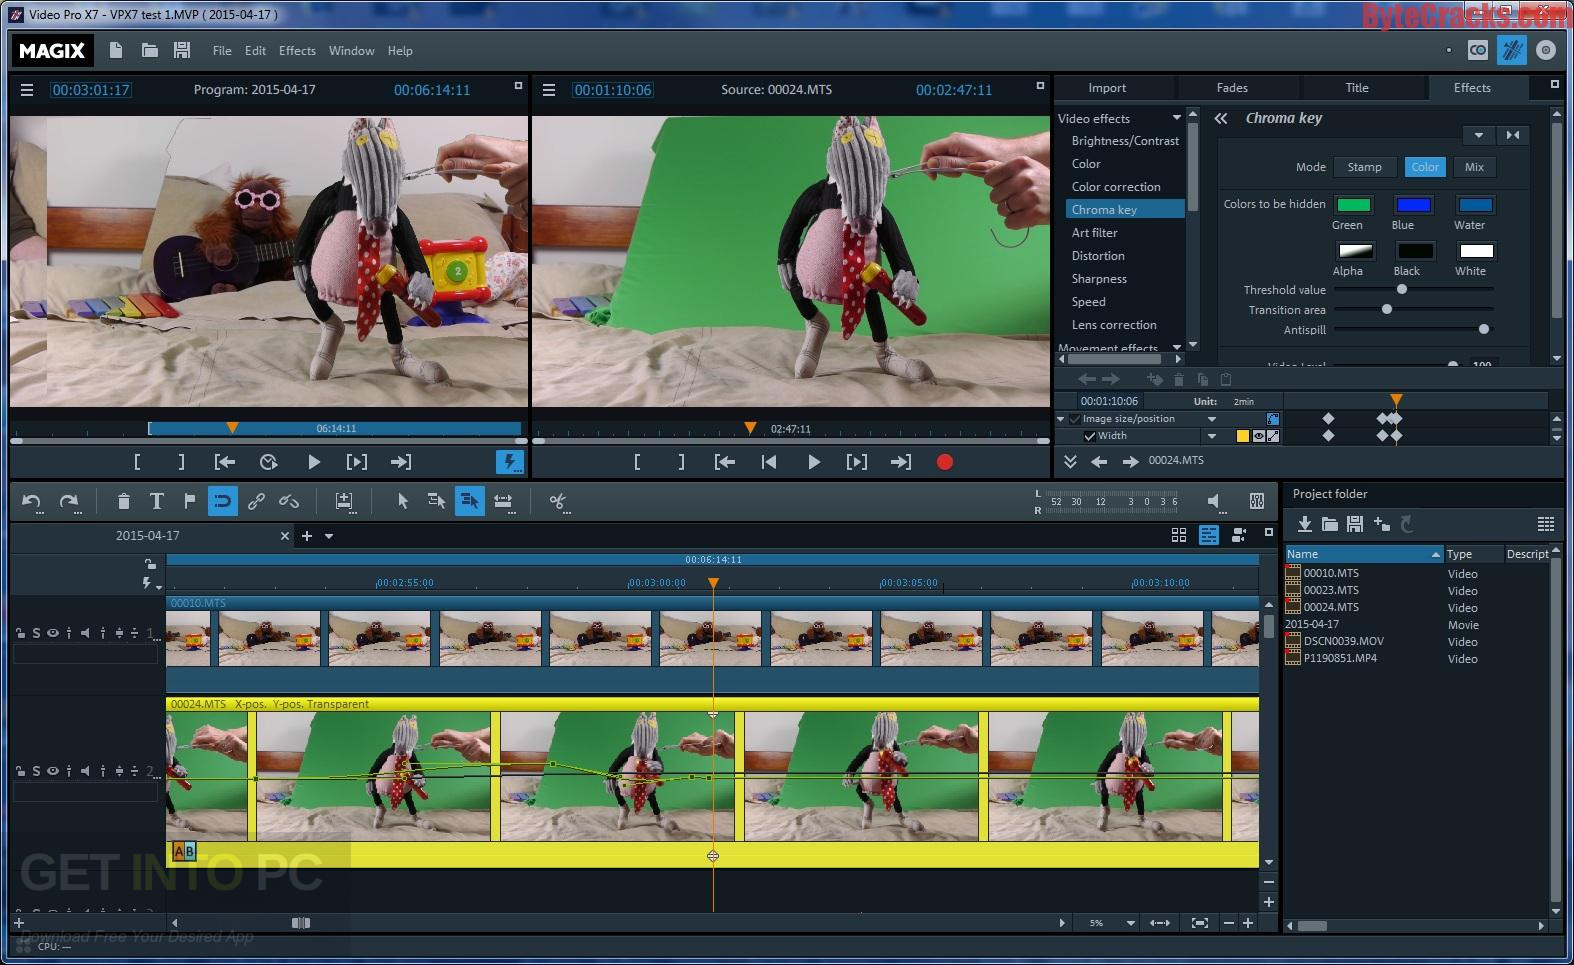 Magic Video Editing Software Free Download Full Version